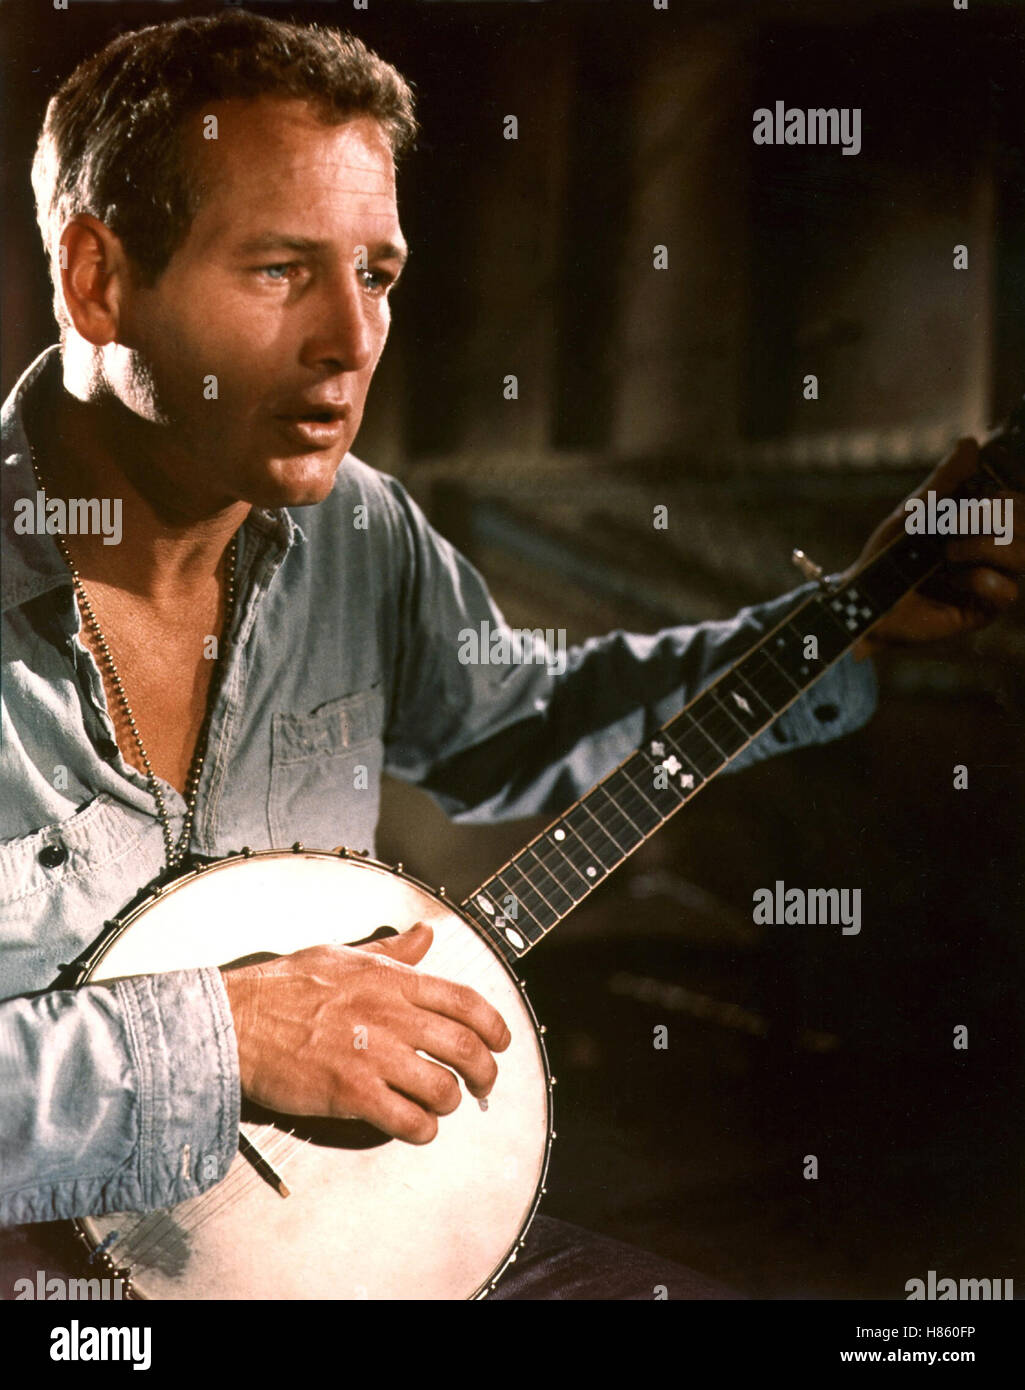 Der Unbeugsame, (COOL HAND LUKE) USA 1966, Regie: Stuart Rosenberg, PAUL NEWMAN, Key: Musikinstrument, Banjo, Stock Photo